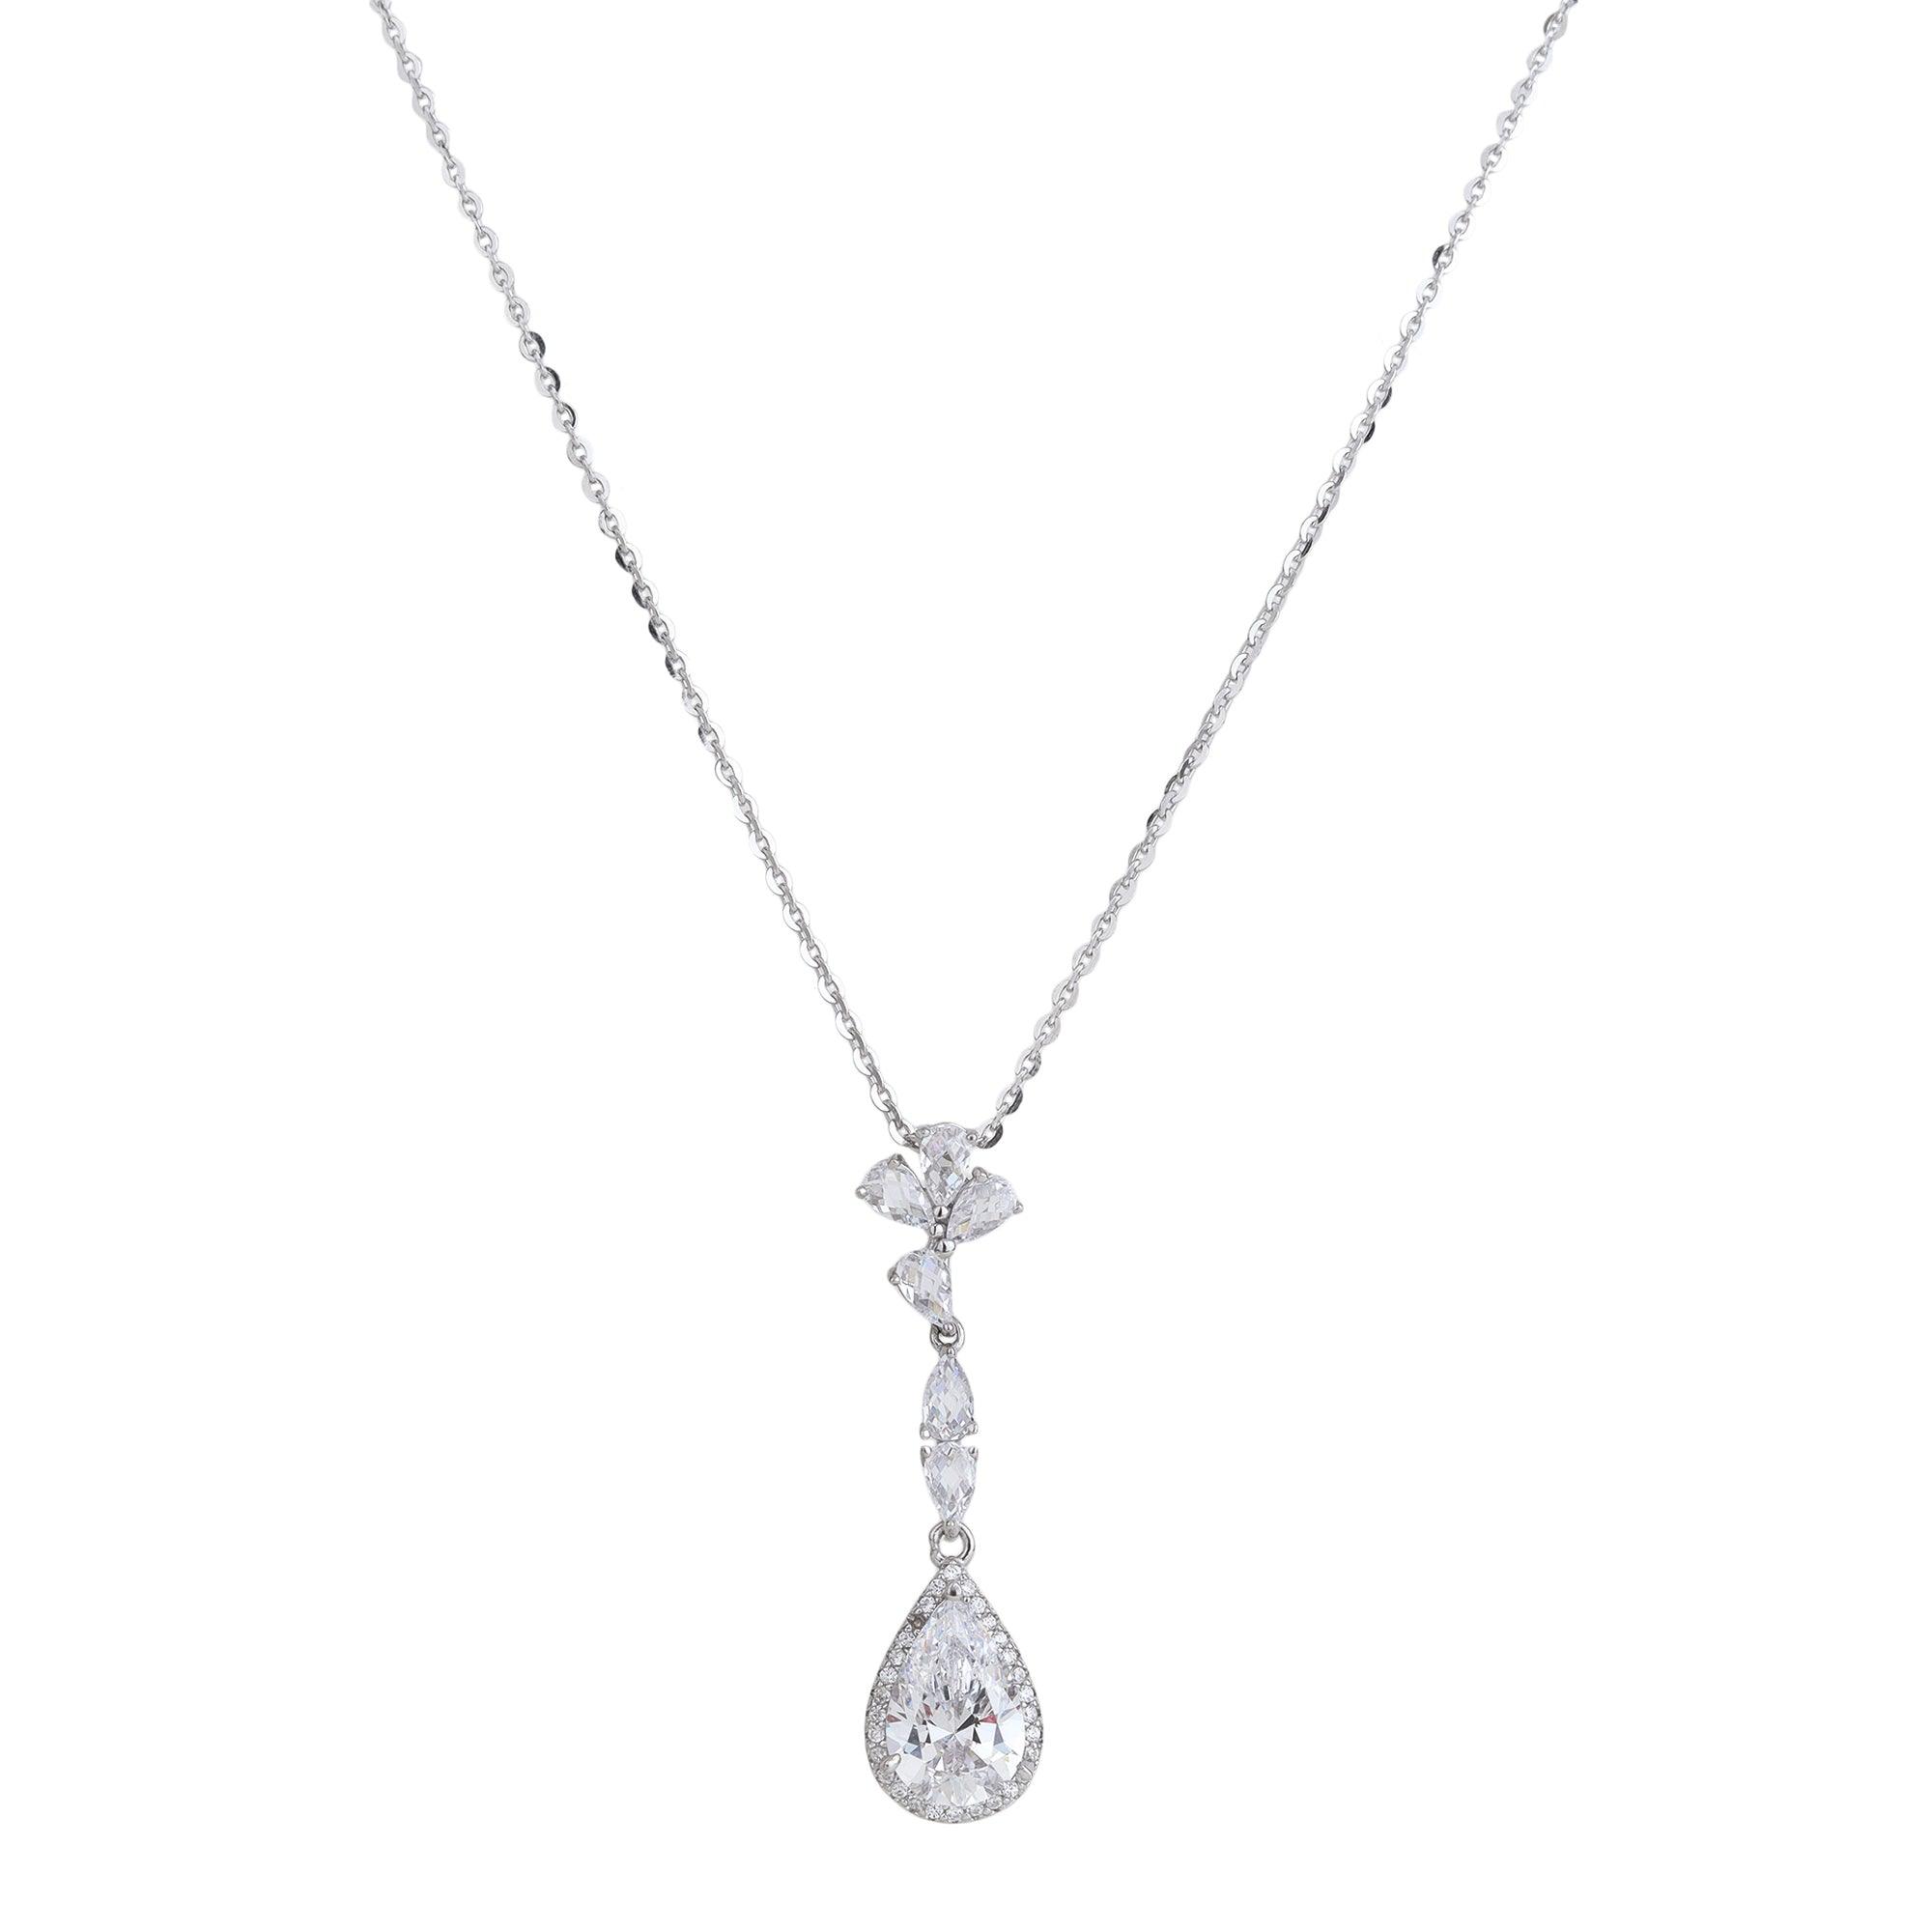 Swarvoski Signature Drop Necklace - silvermark